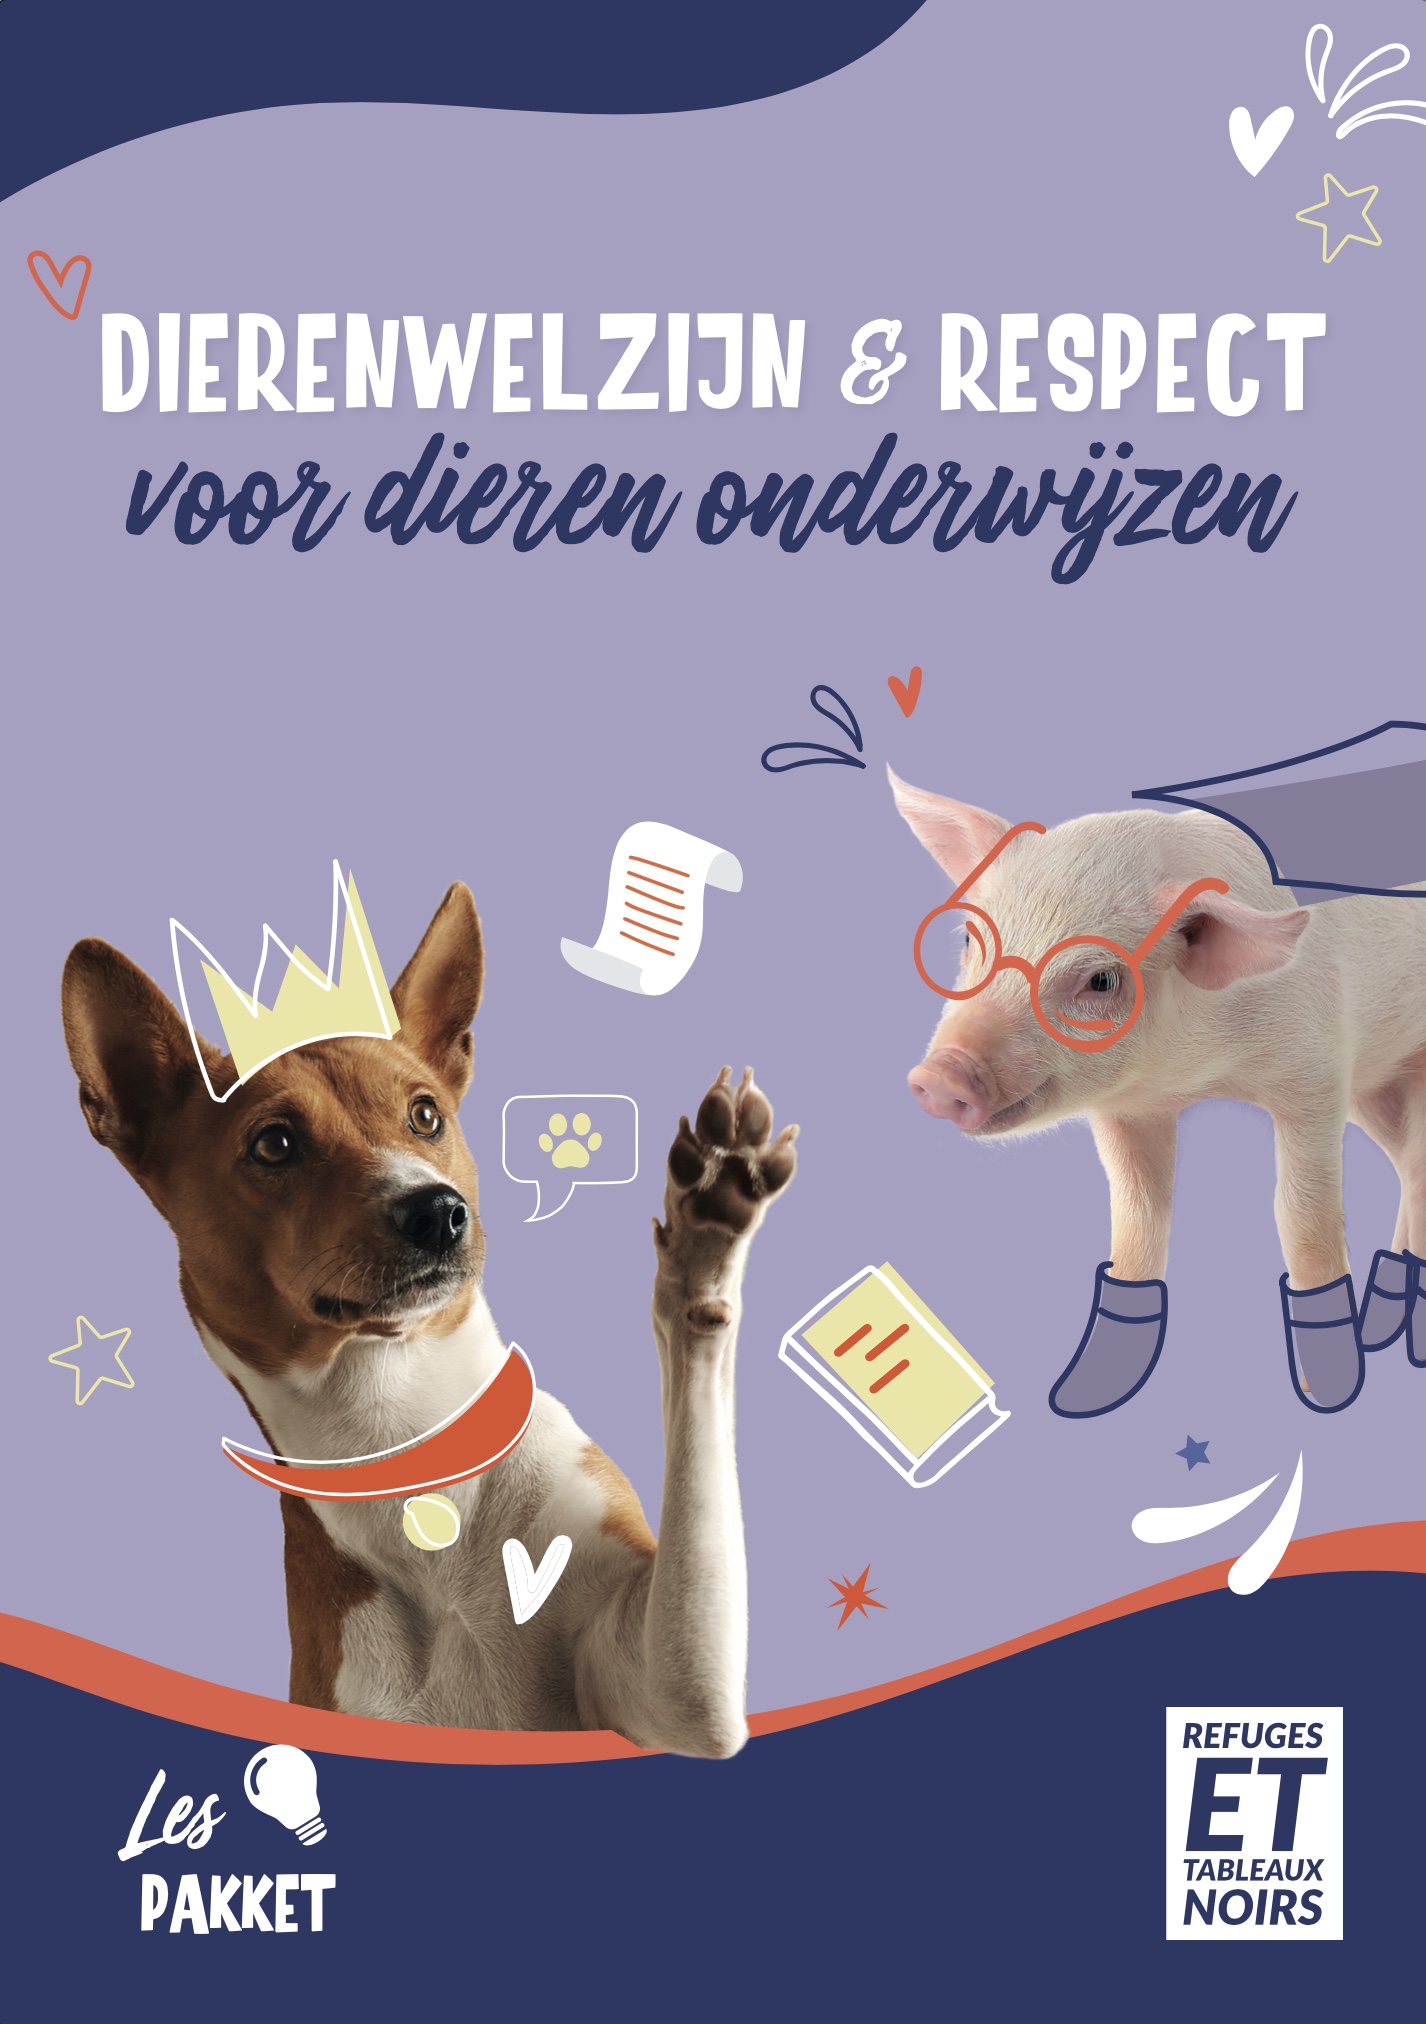 Enseigner le Bien-être et le respect des animaux (Version NL) - Dierenwelzijn & Respect voor dieren onderwijzen